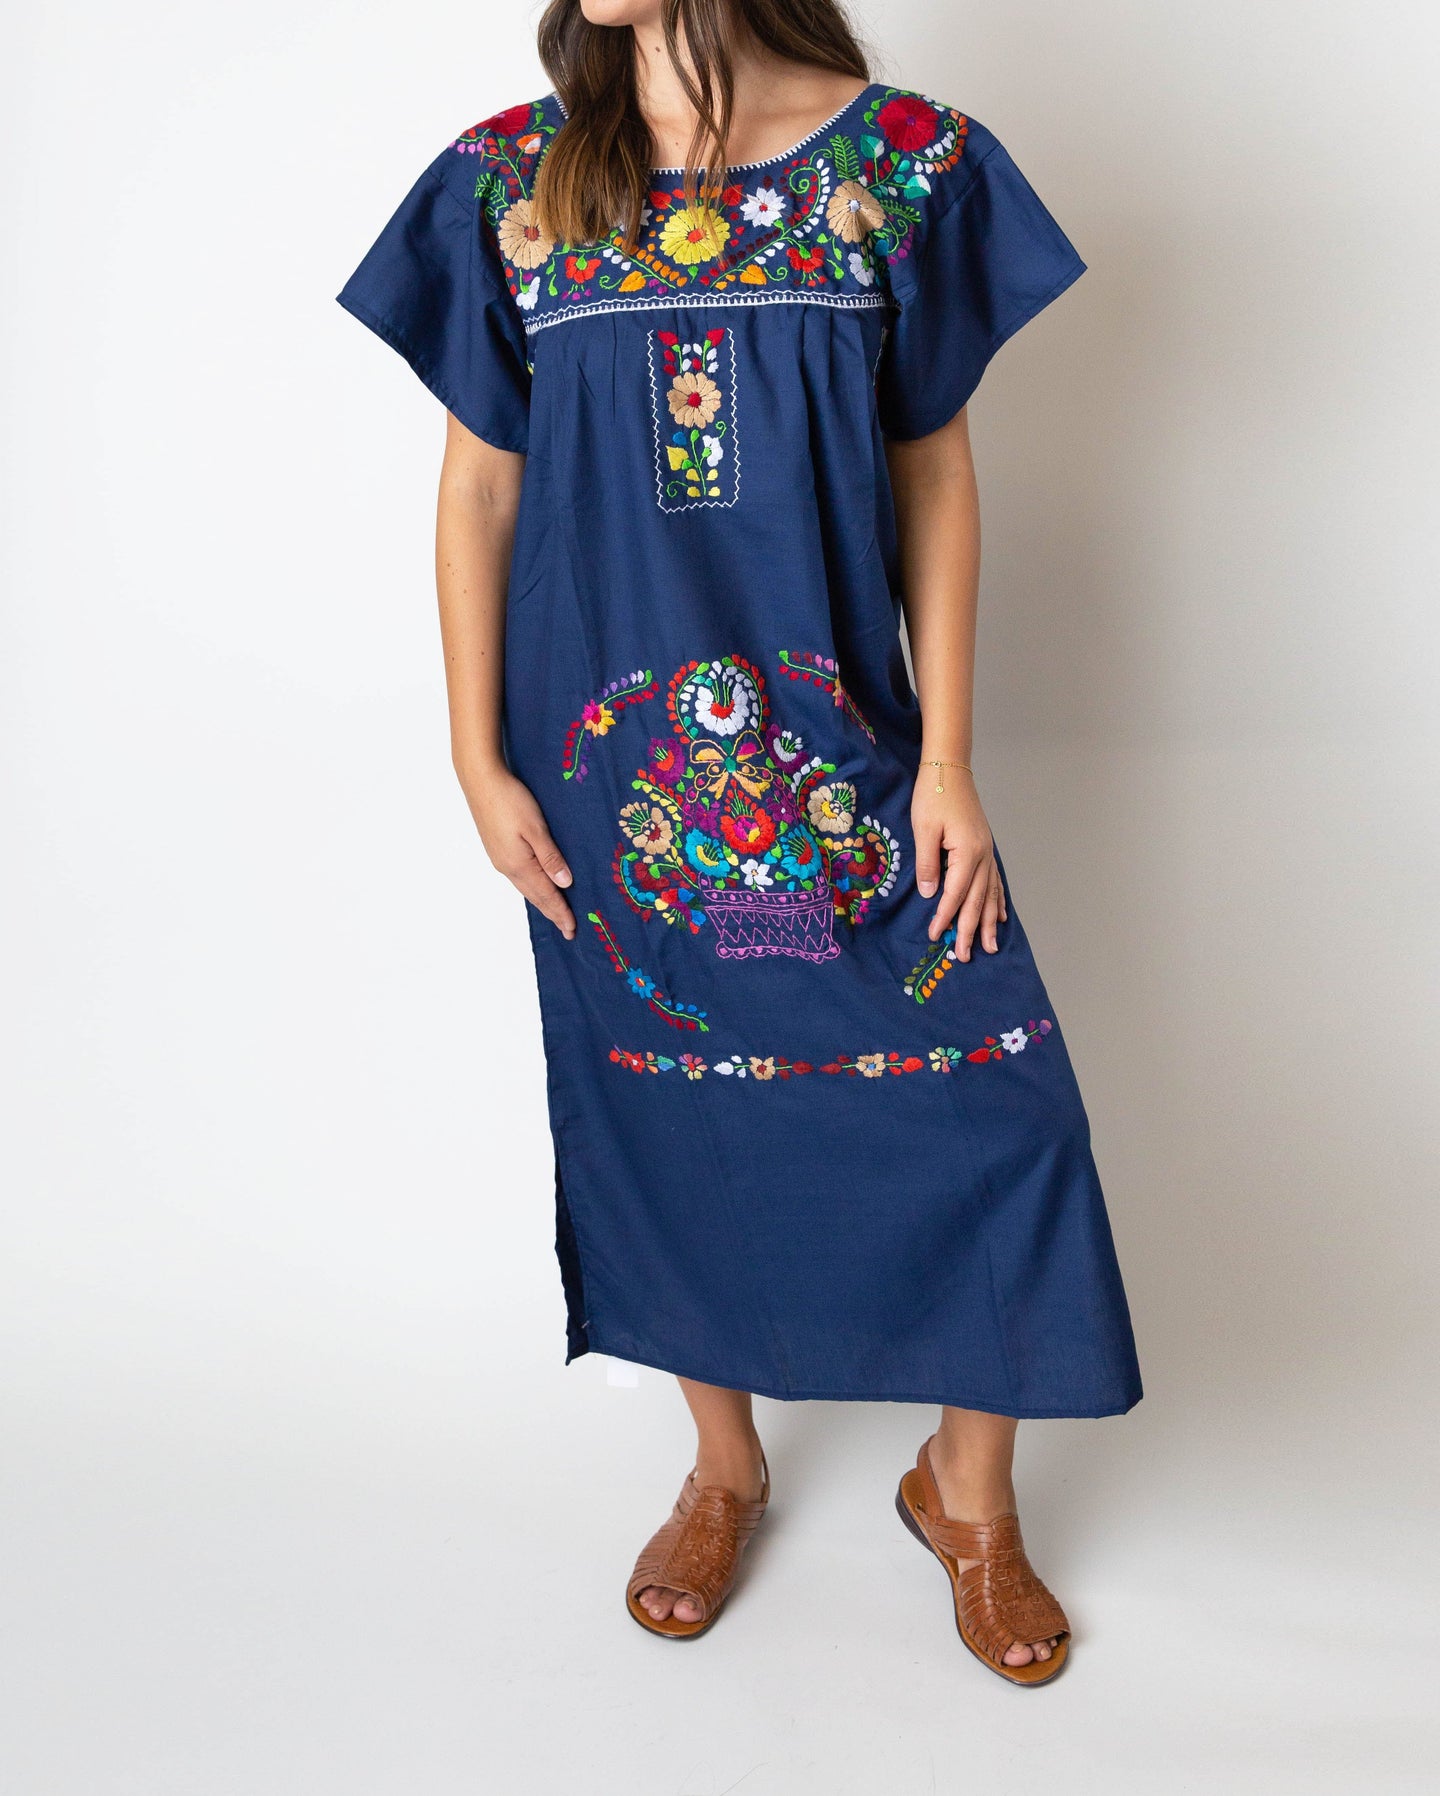 SIDREY Mexican Embroidered Pueblo Dress - Navy Blue